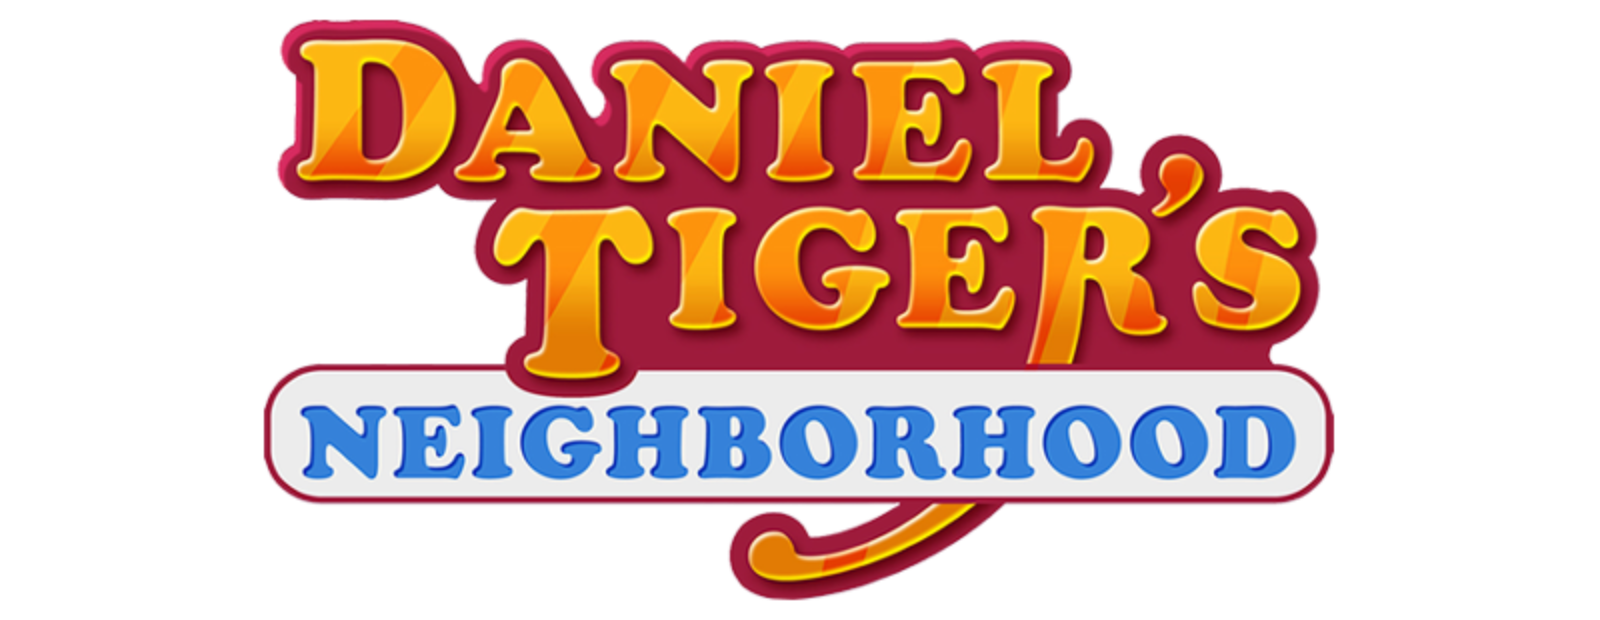 Daniel Tiger's Neighborhood (6 DVDs Box Set)